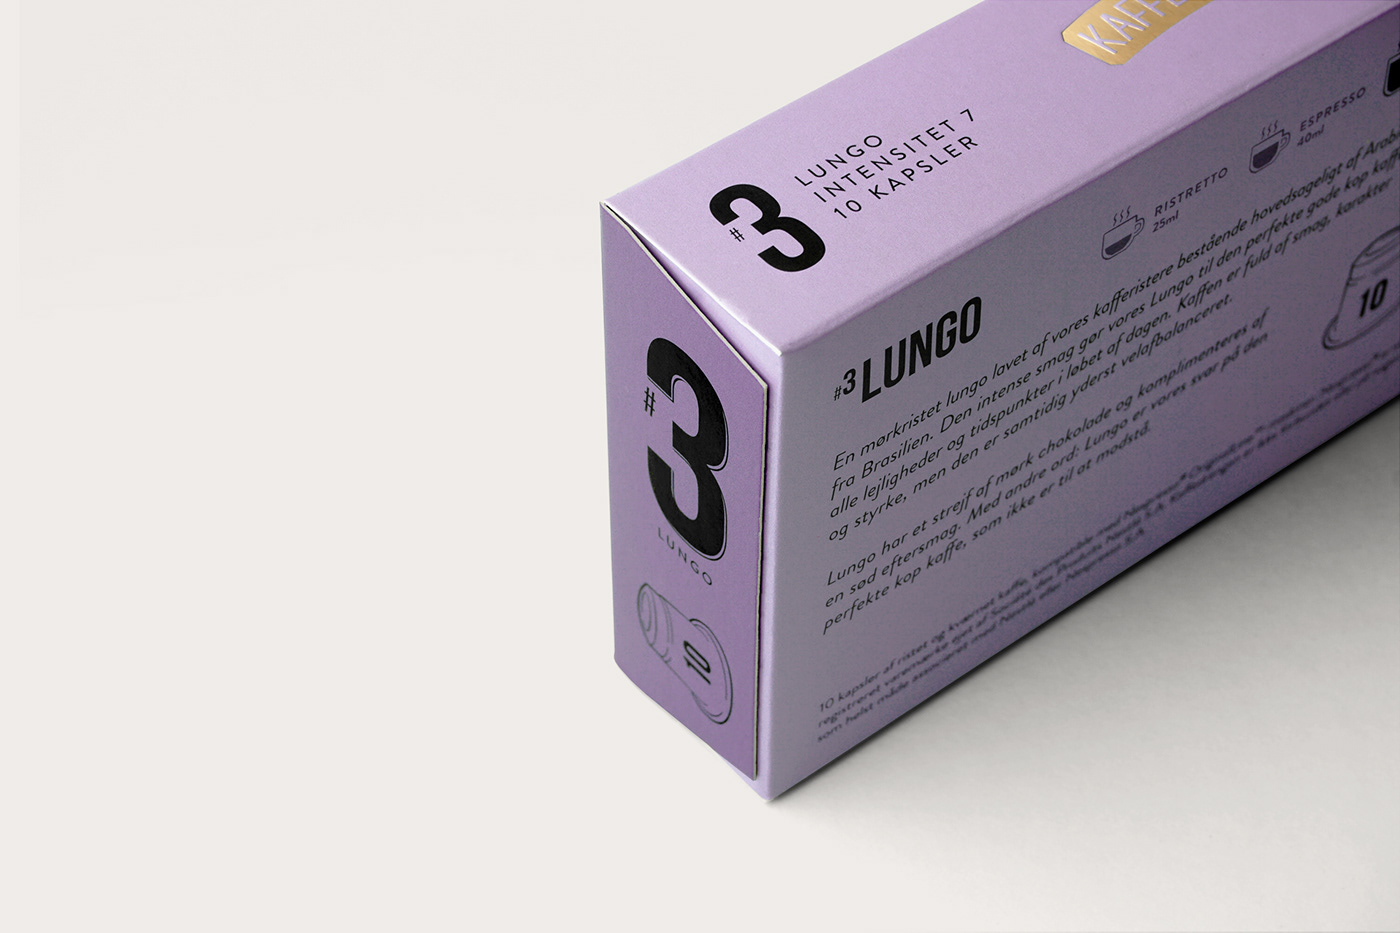 capsul Coffee esprosse kaffe Lungo Packaging ristretto